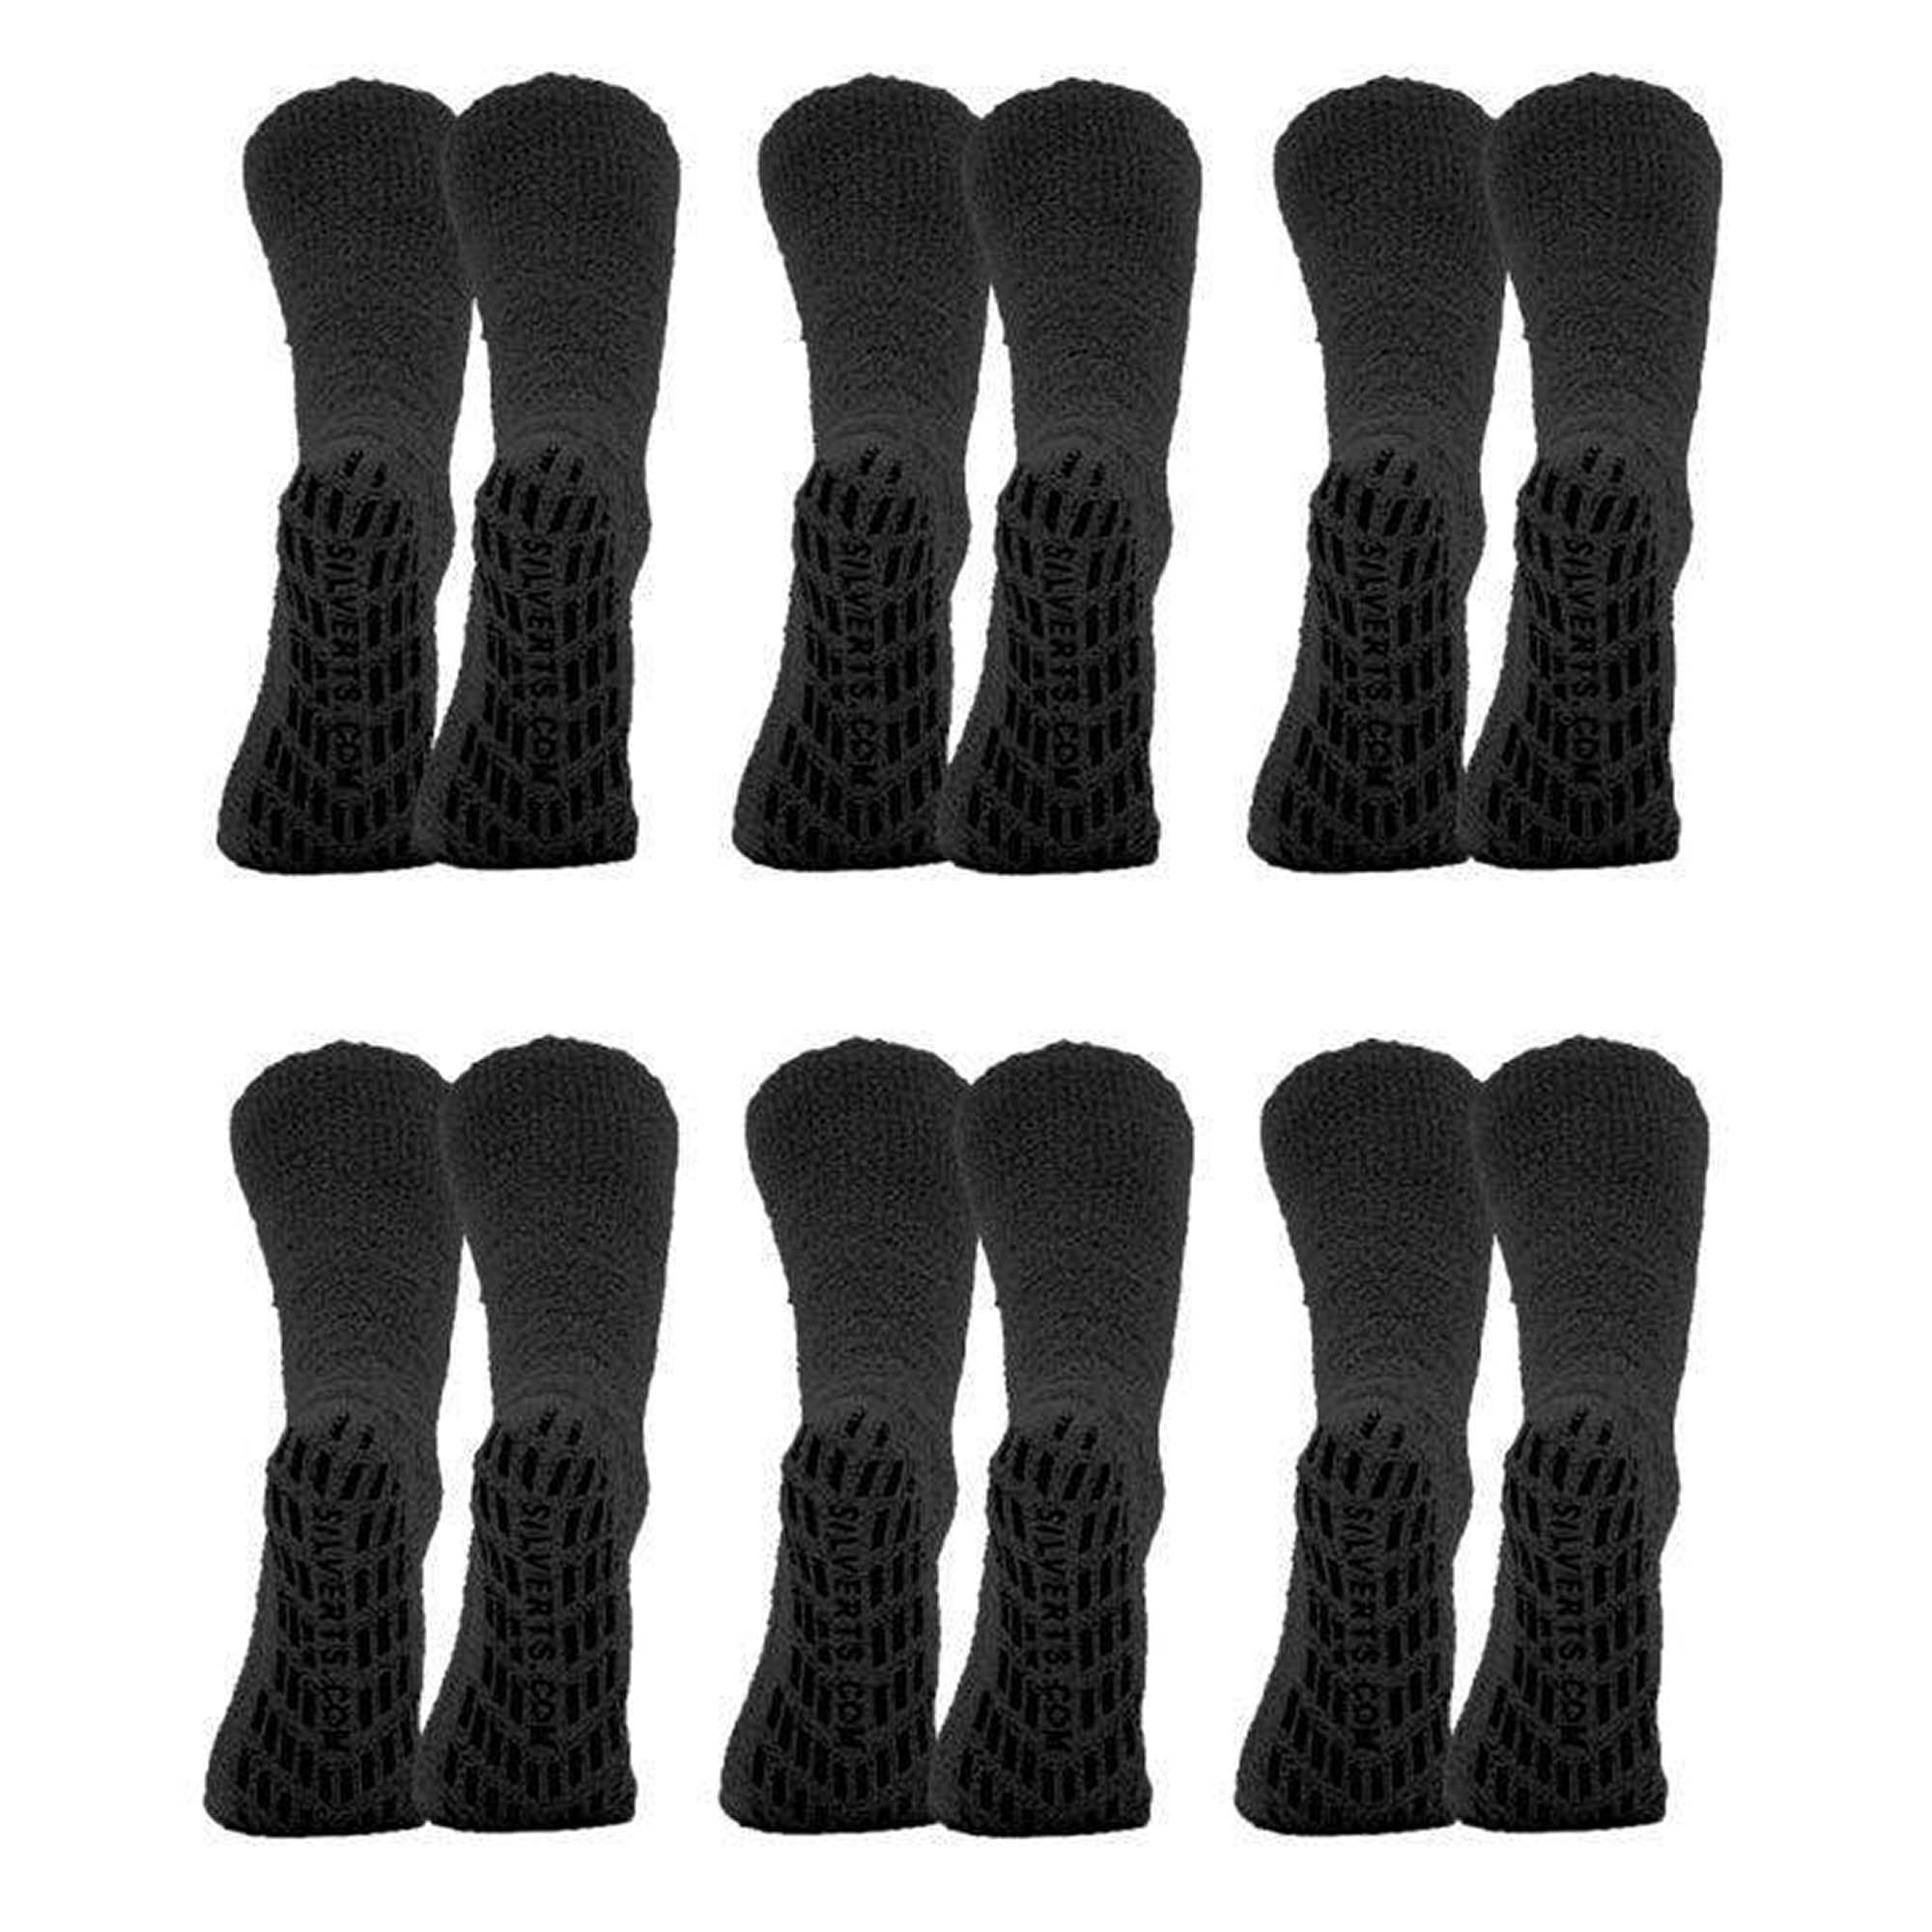 Silverts Slipper Socks - Set Of 6 - Black Pack - OS